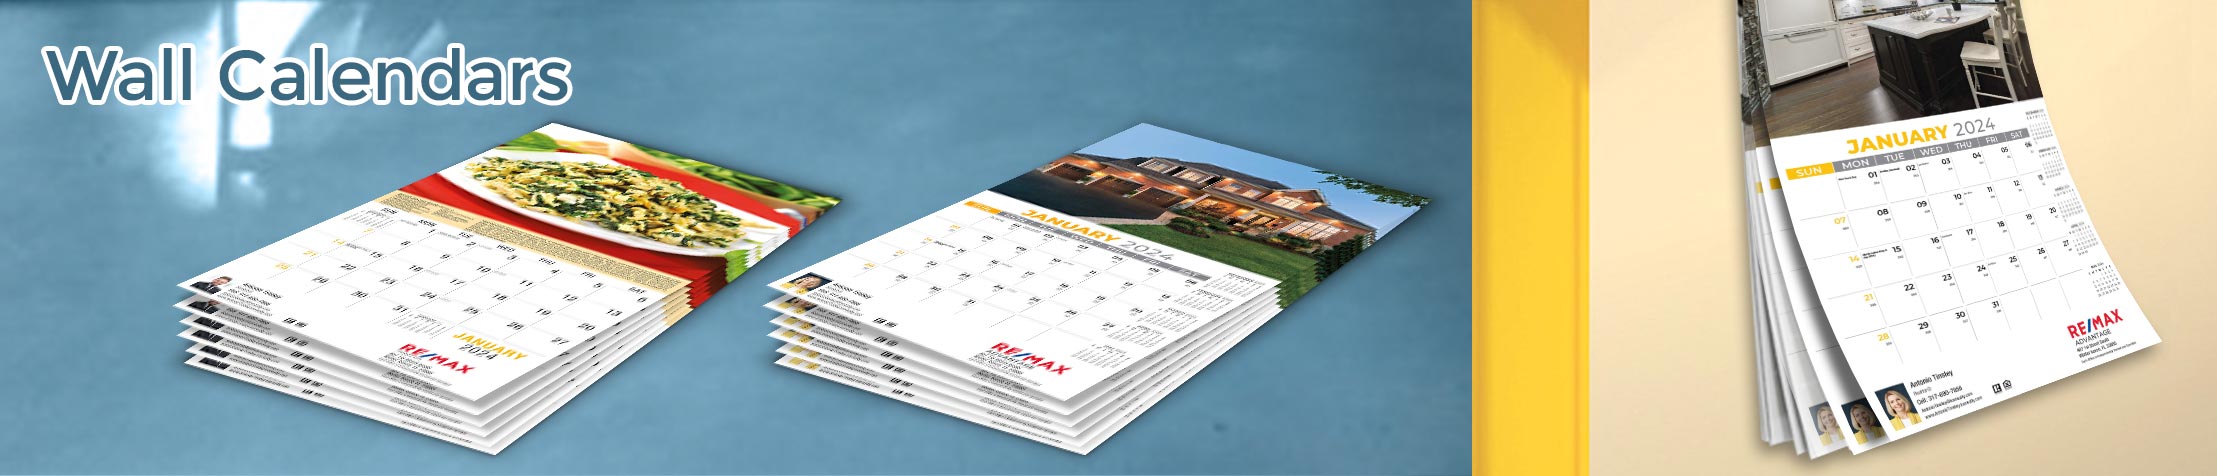 Realty Executives Real Estate Wall Calendars - Realty Executives  2019 wall calendars | BestPrintBuy.com